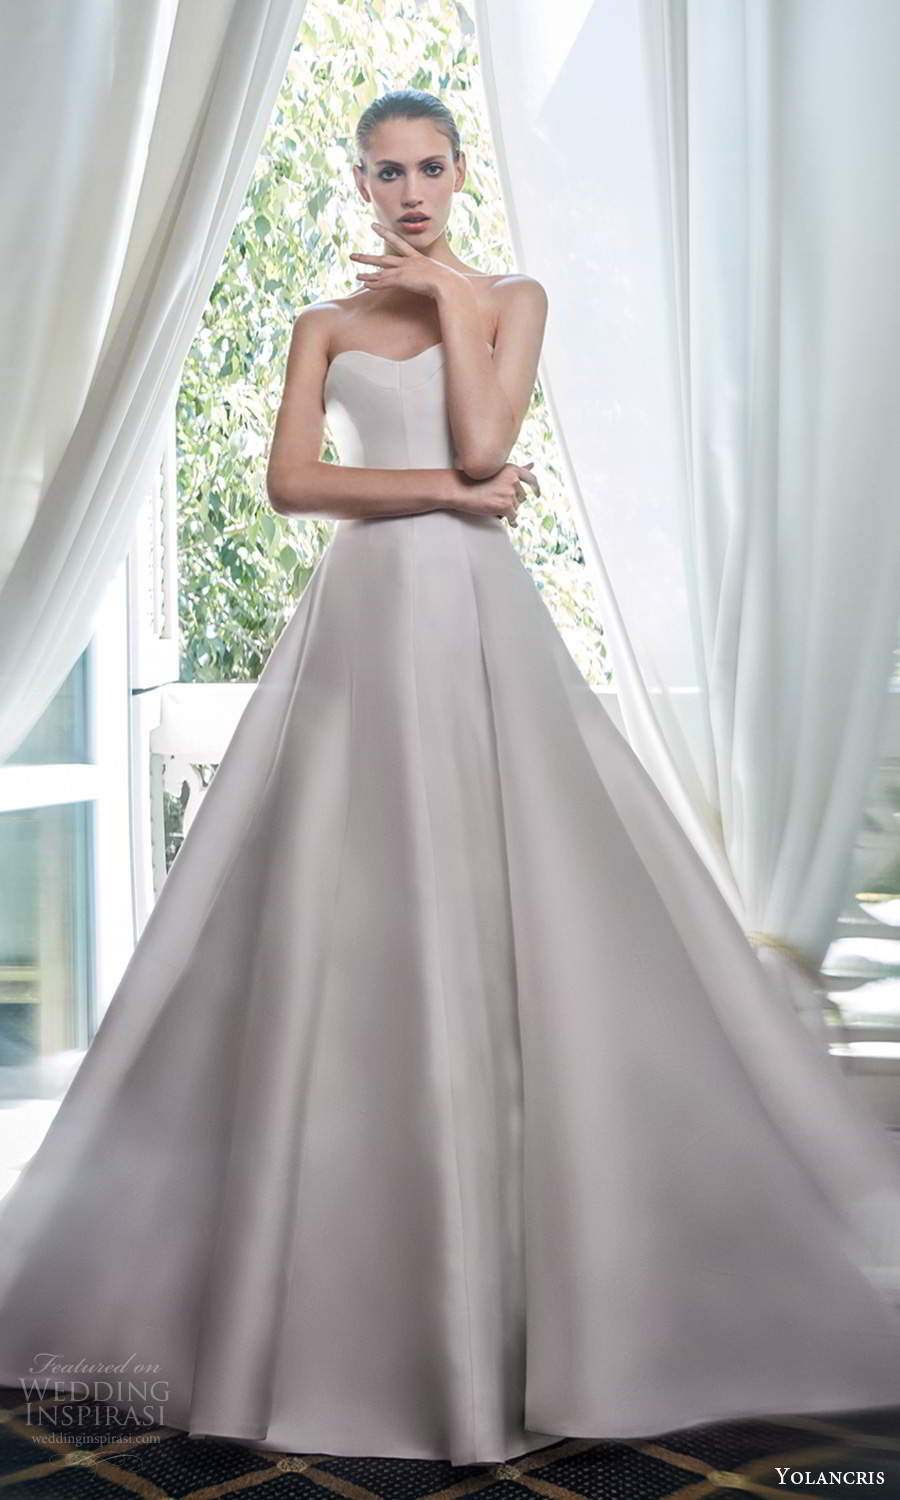 yolancris 2020 bridal couture strapless sweetheart neckline clean minimalist a line ball gown wedding dress chapel train (22) mv